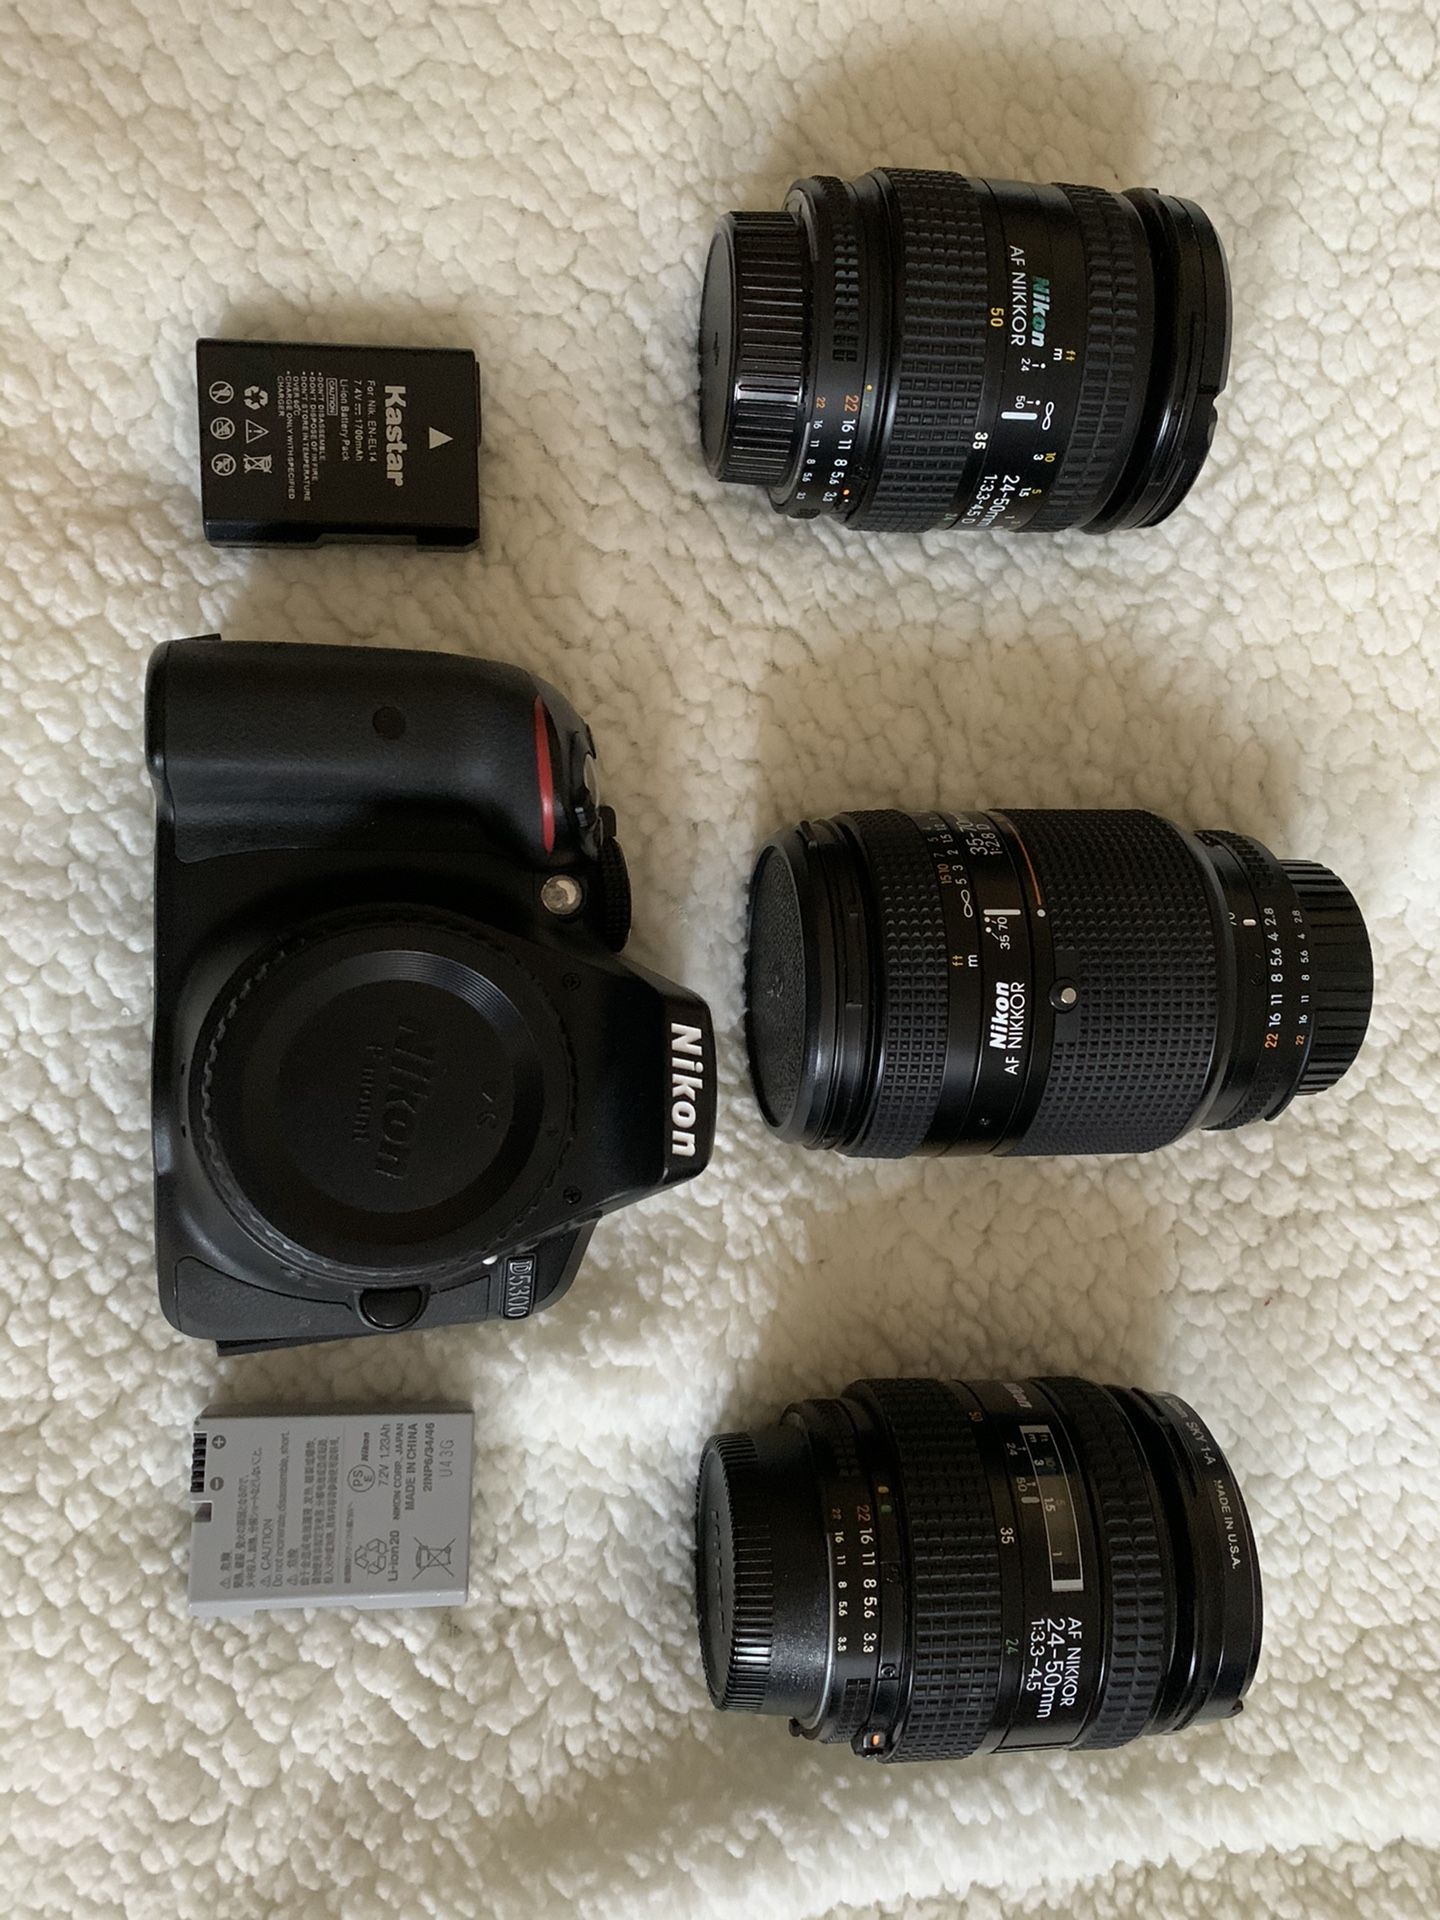 Nikon D5300 Digital Camera, for Sell or Trade